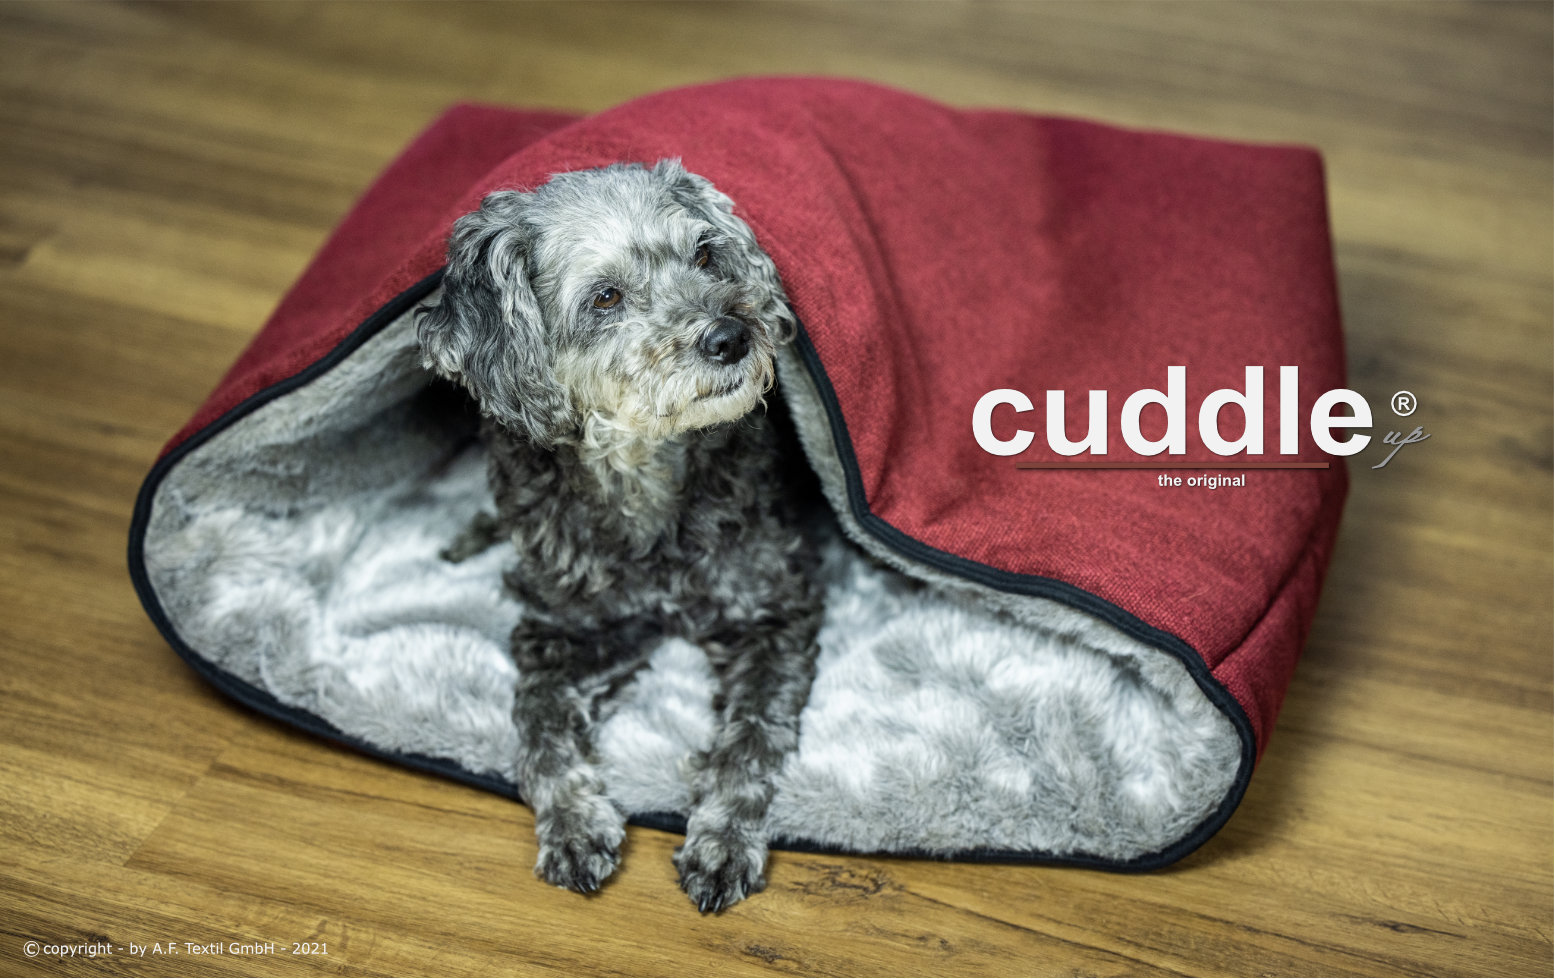 Cuddle Up - Hundebett